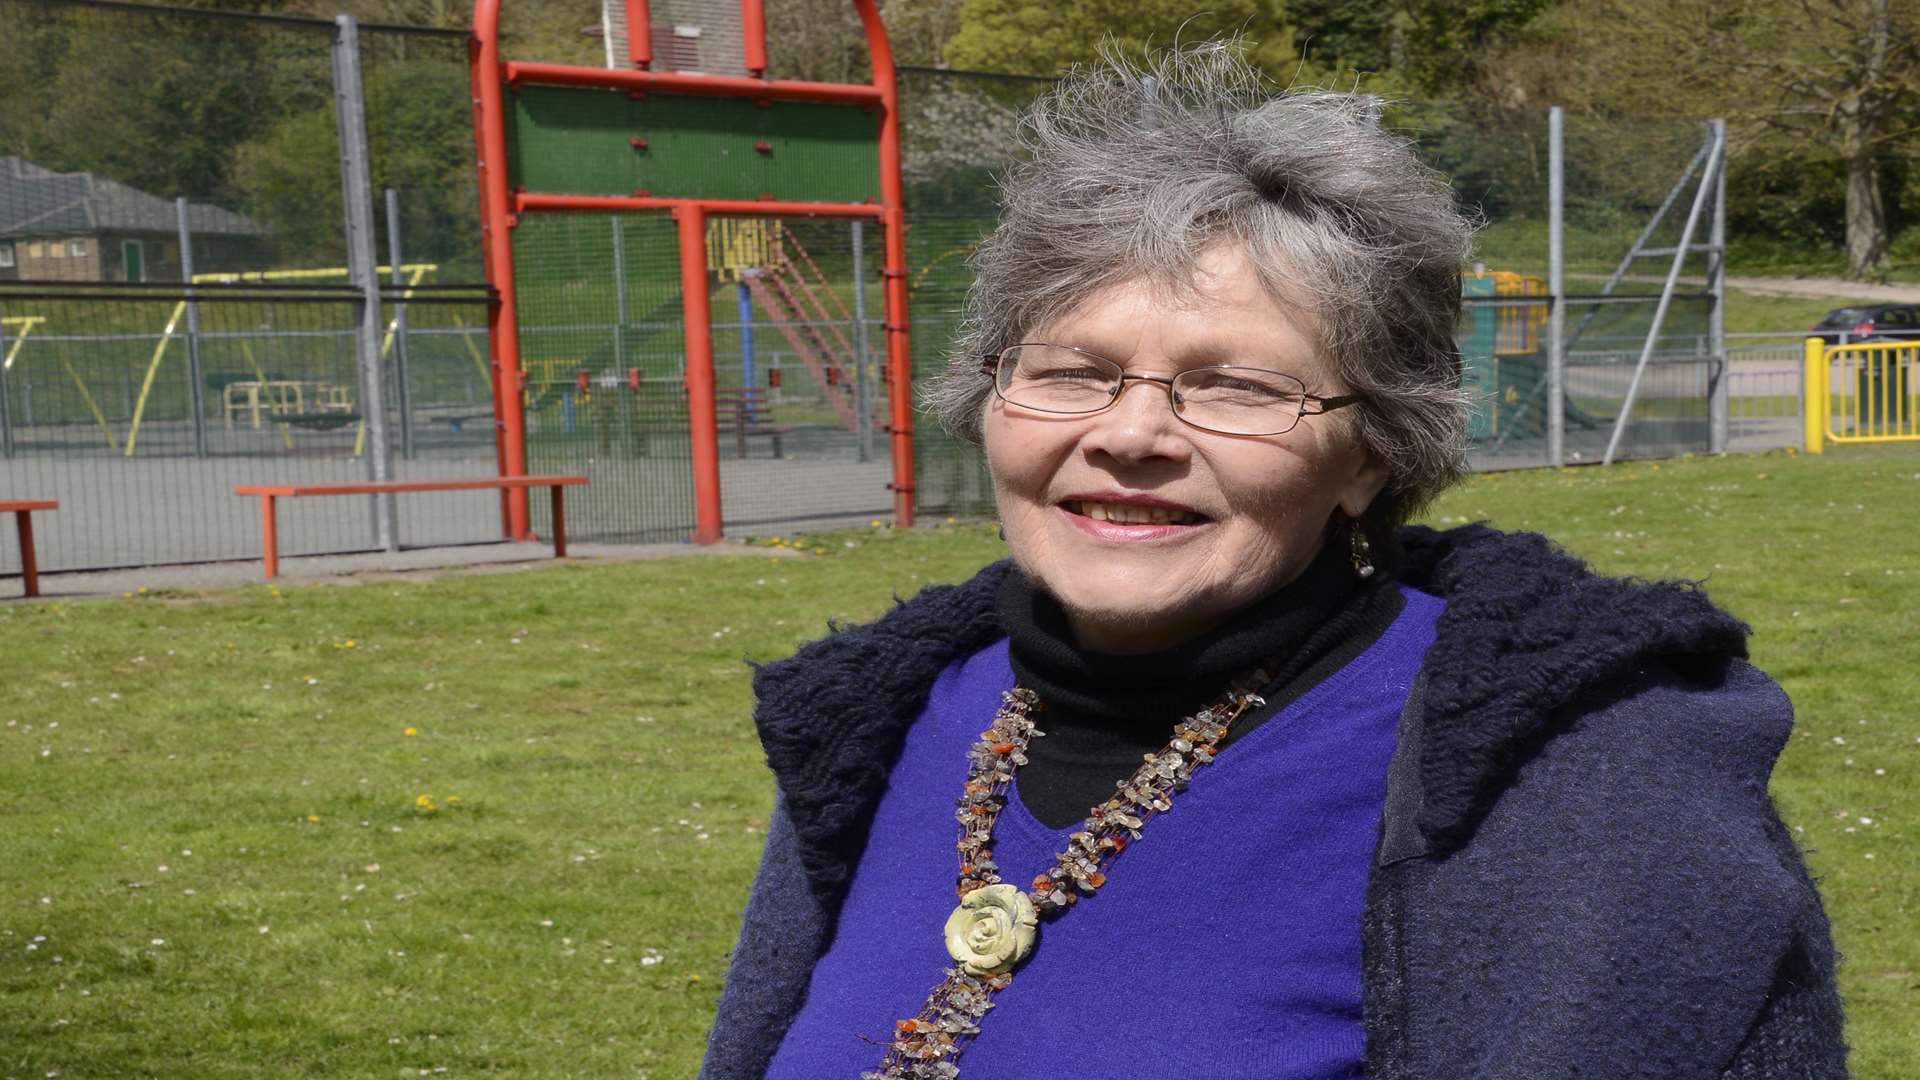 Geraldine Aldridge would like a skate park to be built near Elms Vale recreation ground